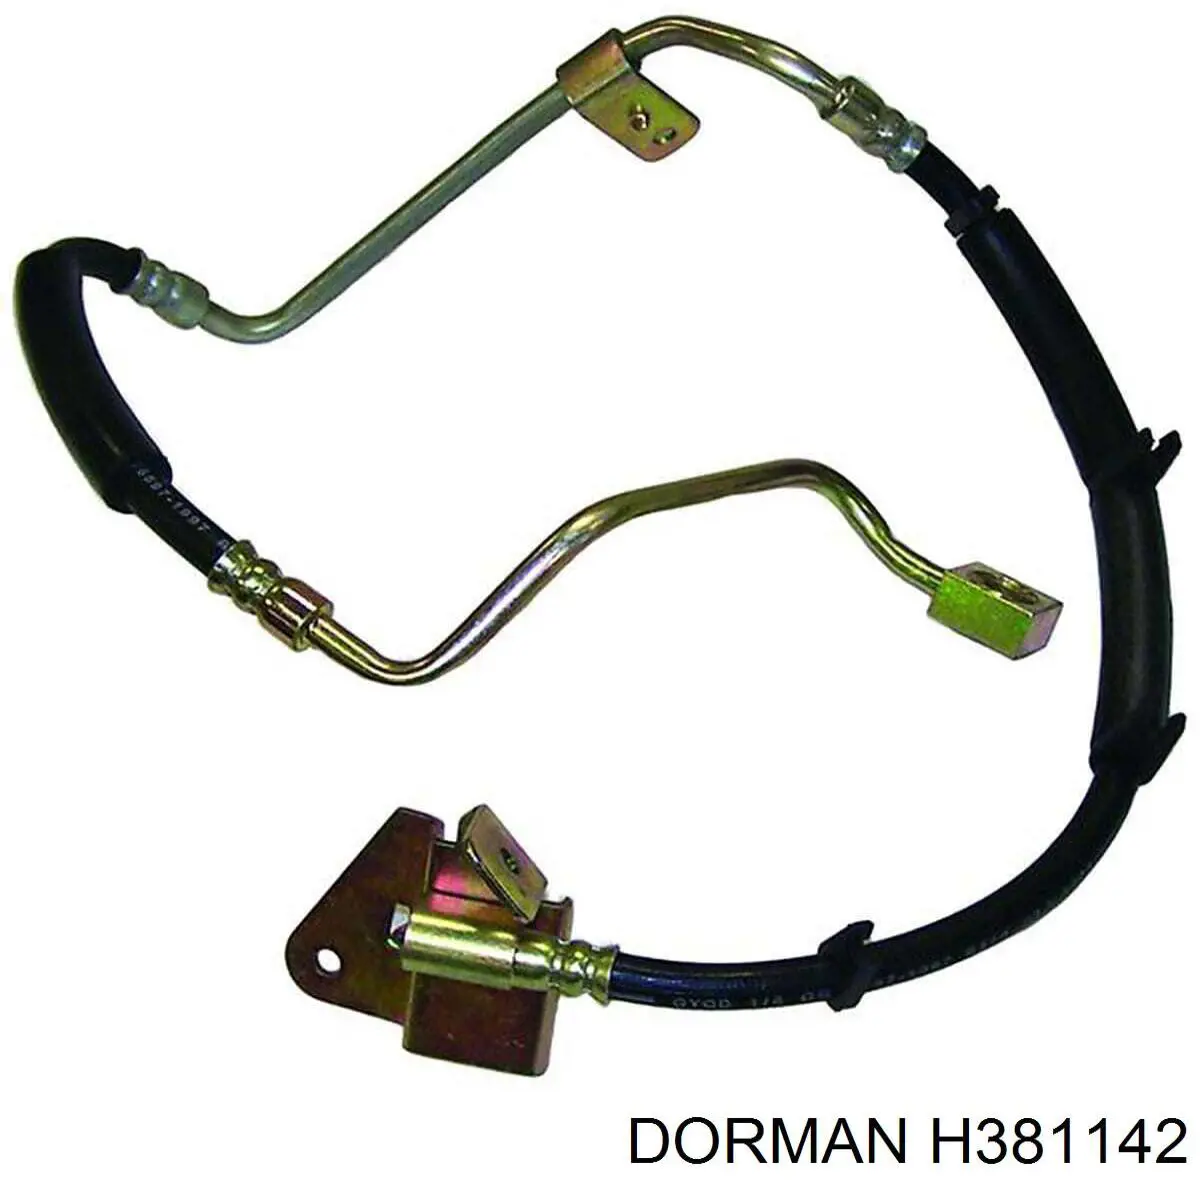 H381142 Dorman шланг тормозной задний правый